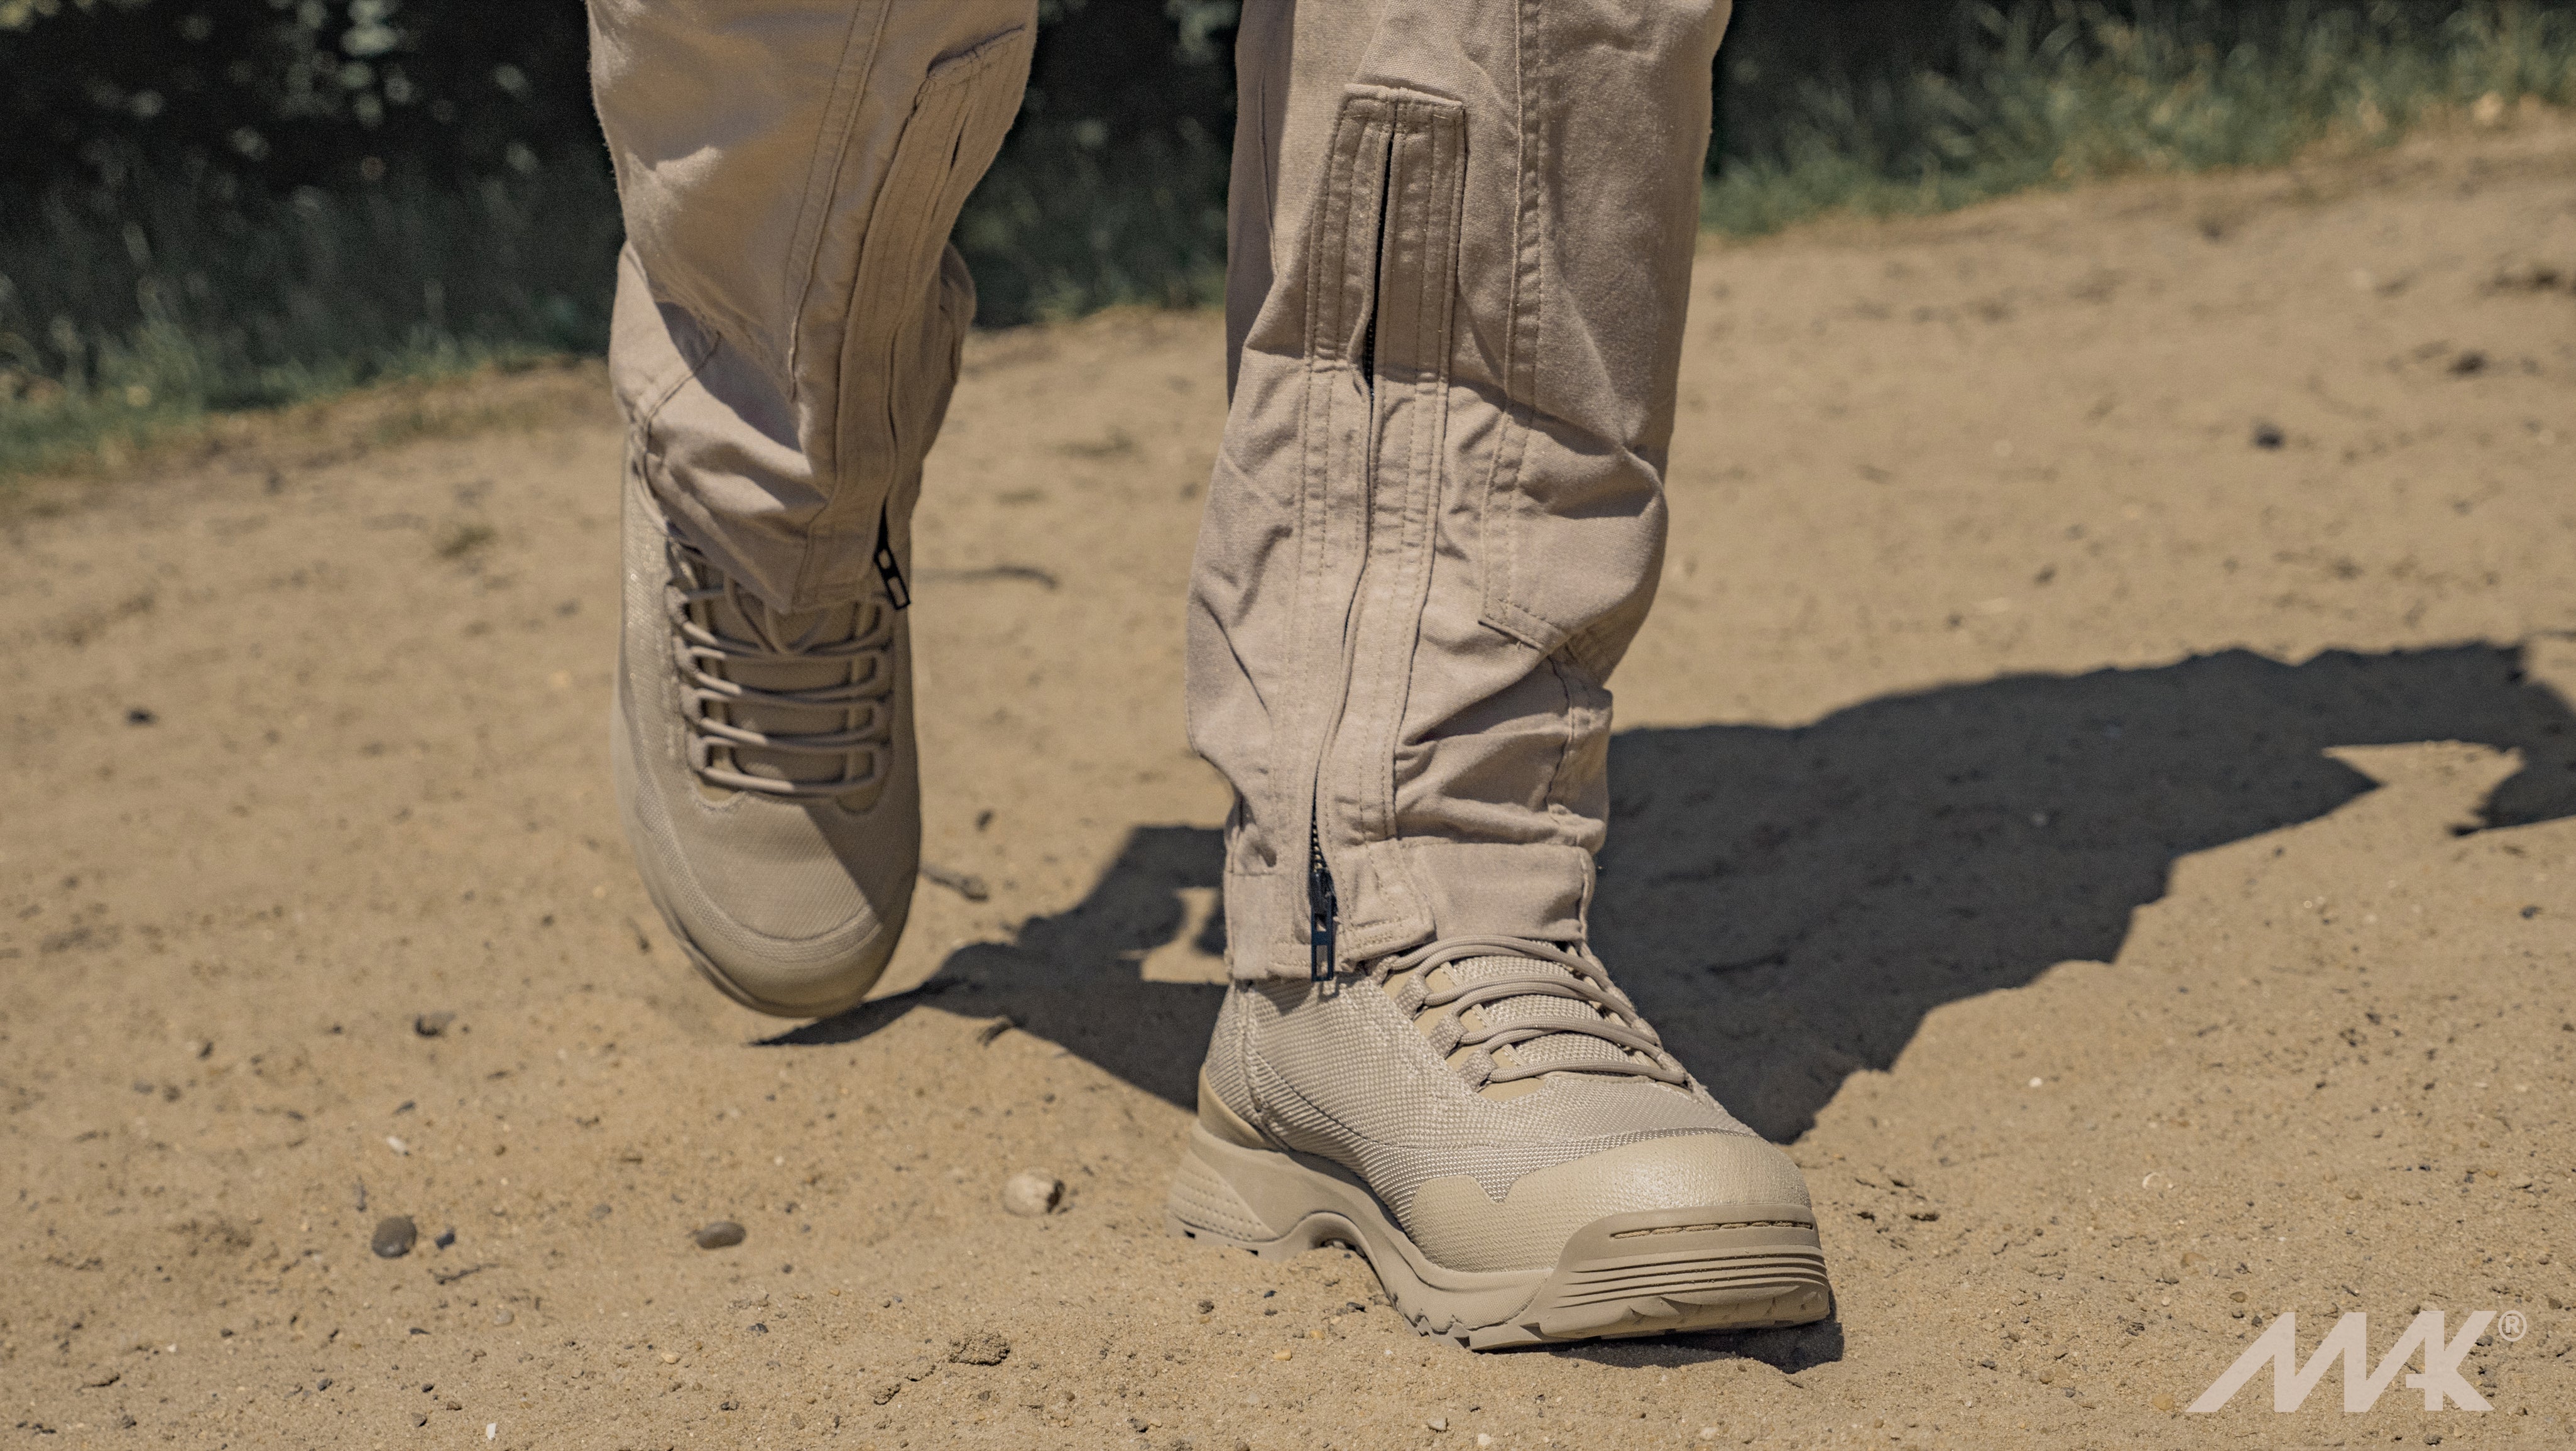 delta x desert tan military boot walking through the sand